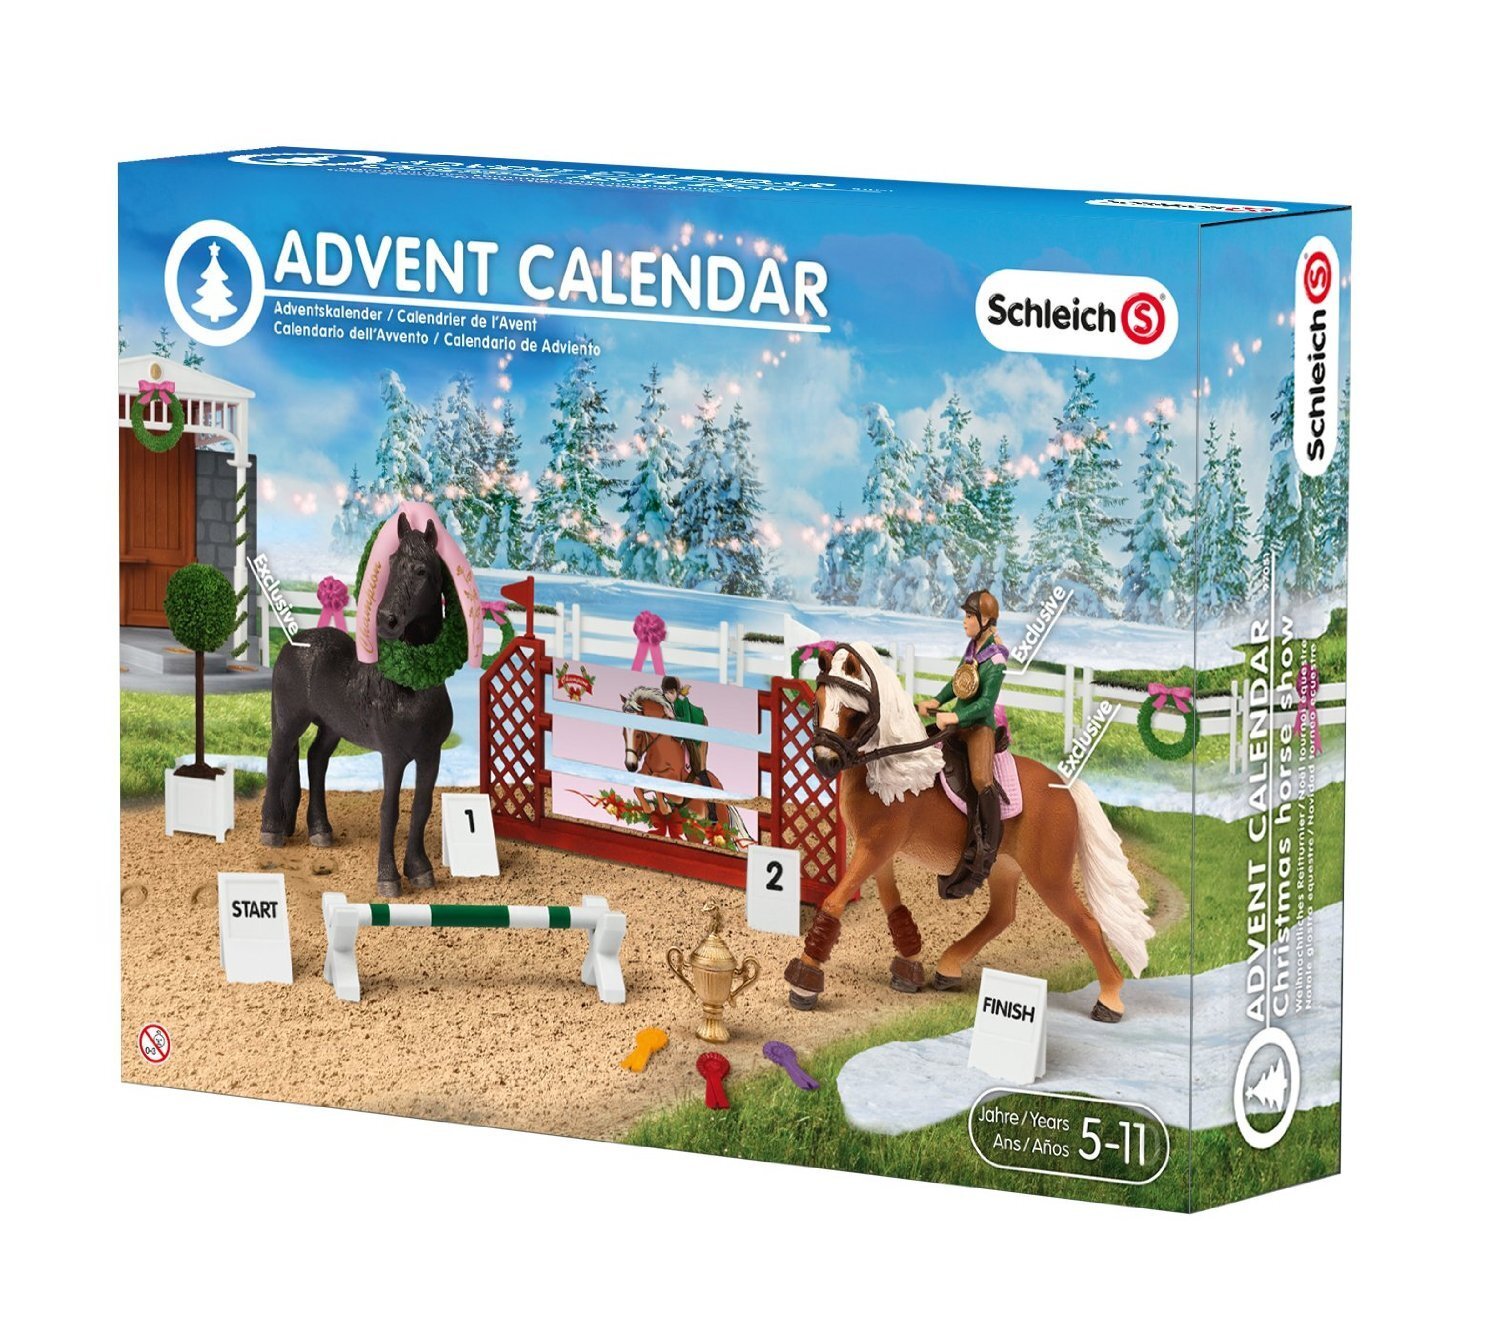 Buy Schleich Horse Advent Calendar 97051